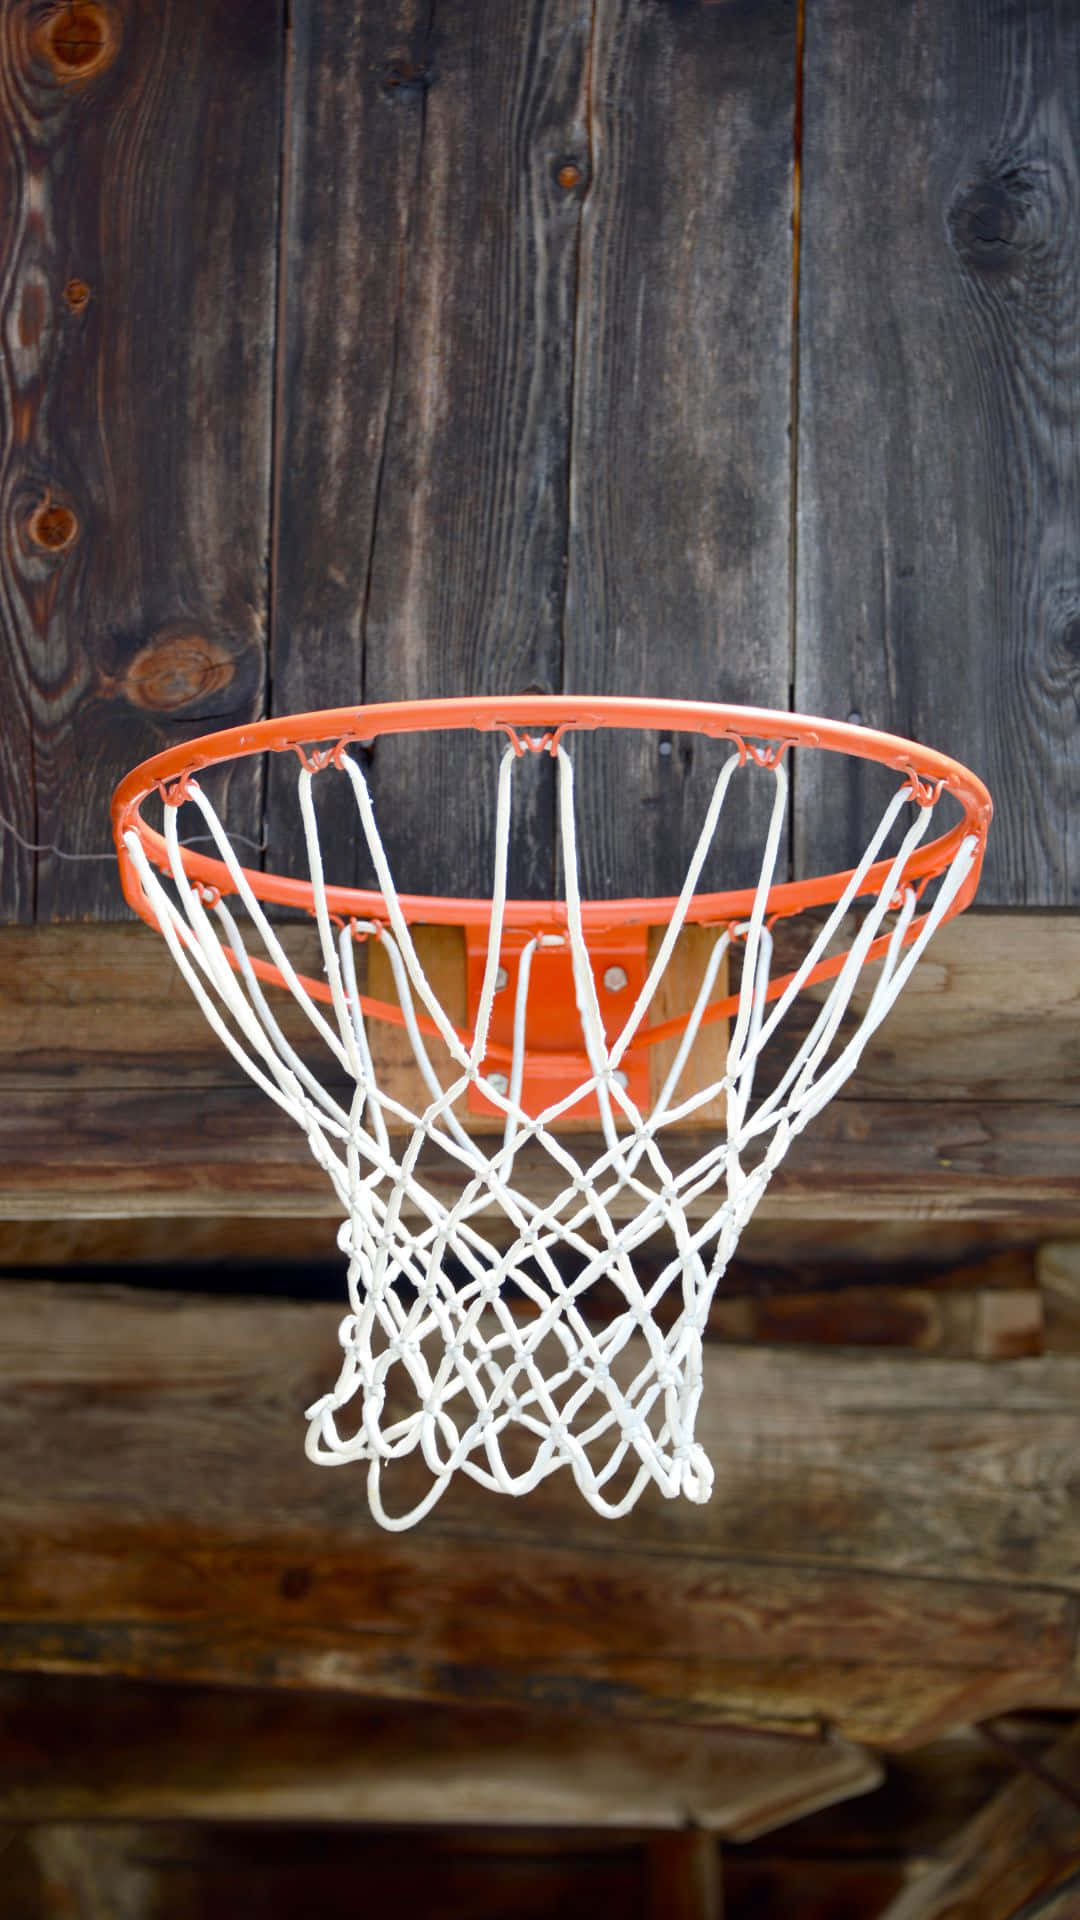 Basketball Hoop Against Wooden Backdrop Wallpaper